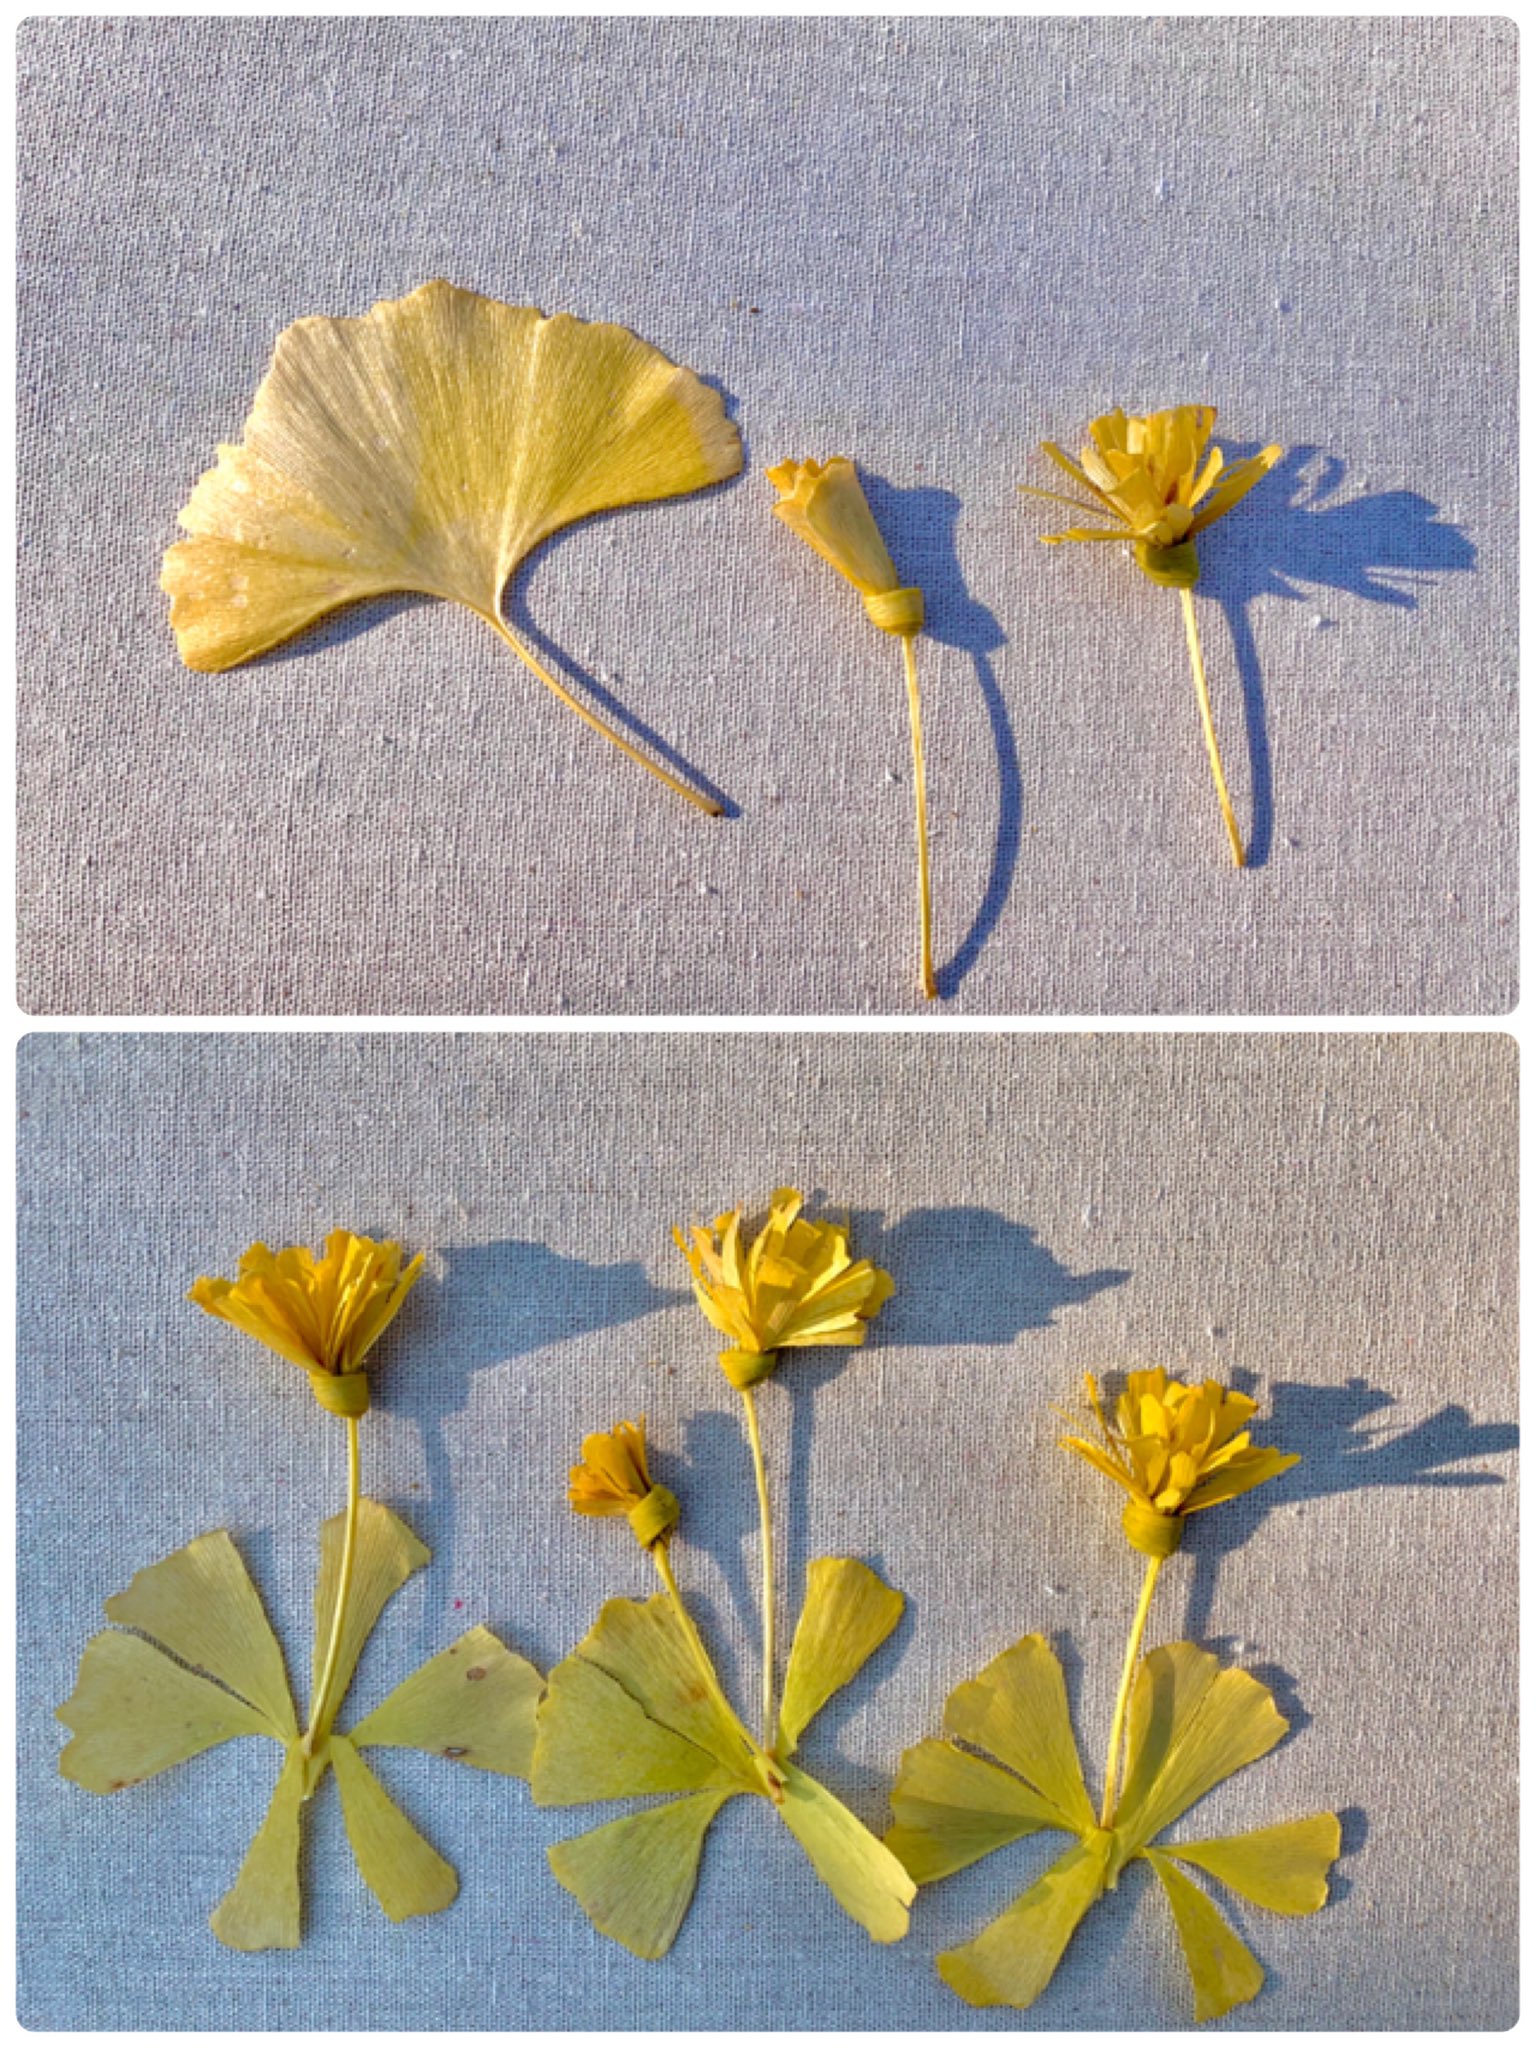 Inori Ar Twitter イチョウでタンポポを作りました 面積の広いイチョウの葉を使います 半分に折り更に蛇腹に折り 葉の下の方をもみもみ 柄ではなく葉でひと結びします 花びら は短くても大丈夫なのでガクをしっかり作ります 花弁を割いてタンポポの花です 緑っ